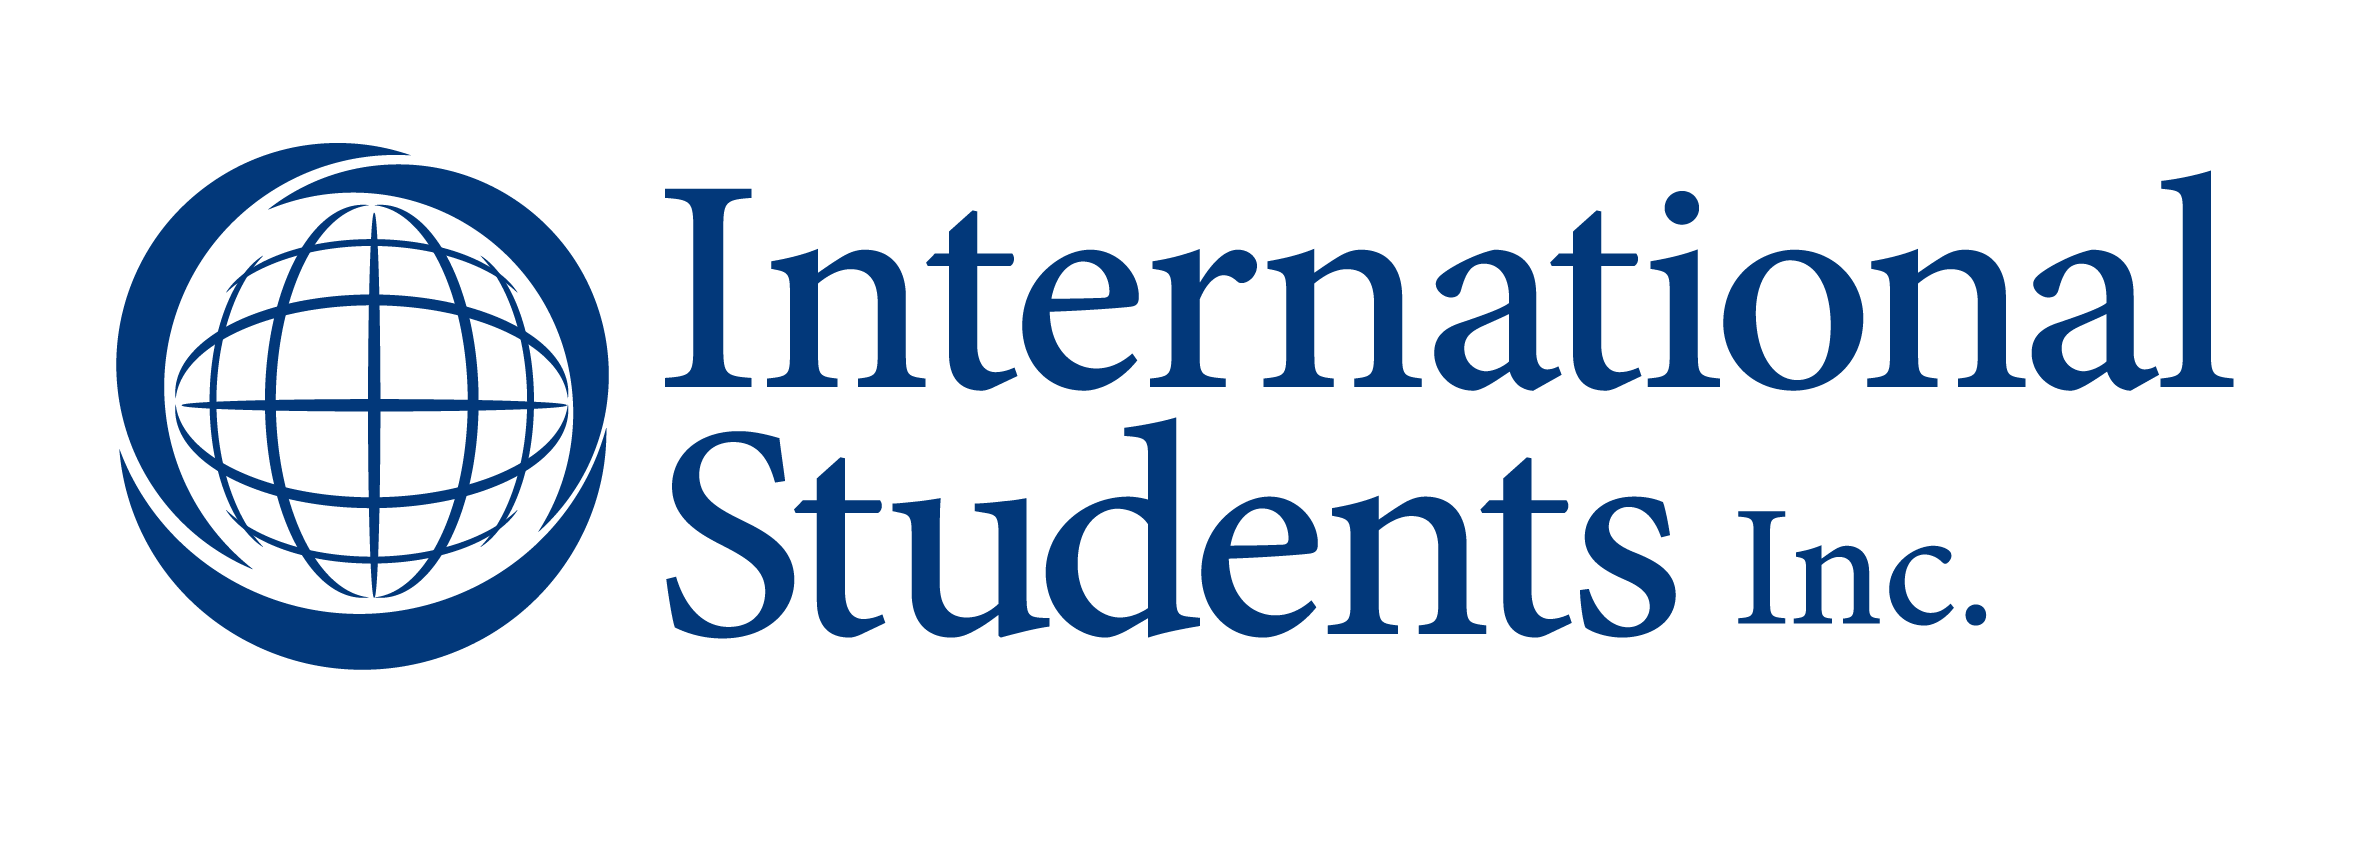 international students inc. logo